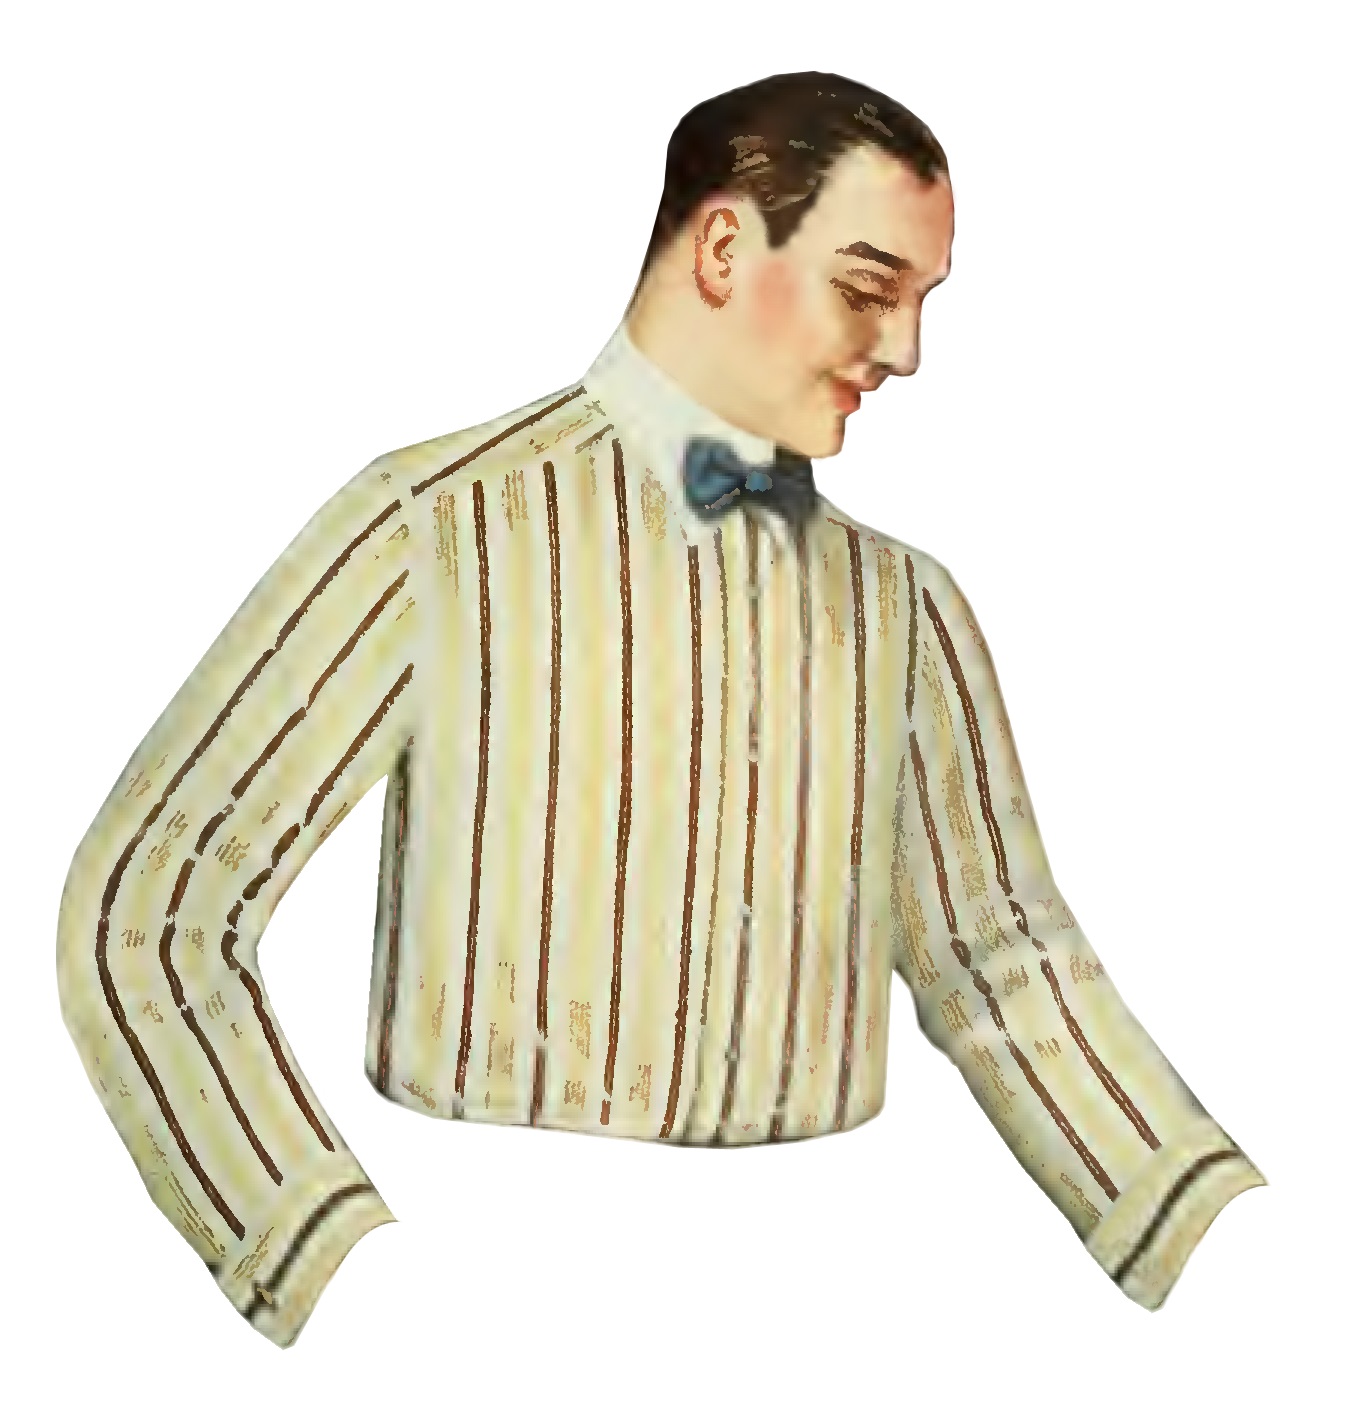 1920s Men’s Shirts and Collars History